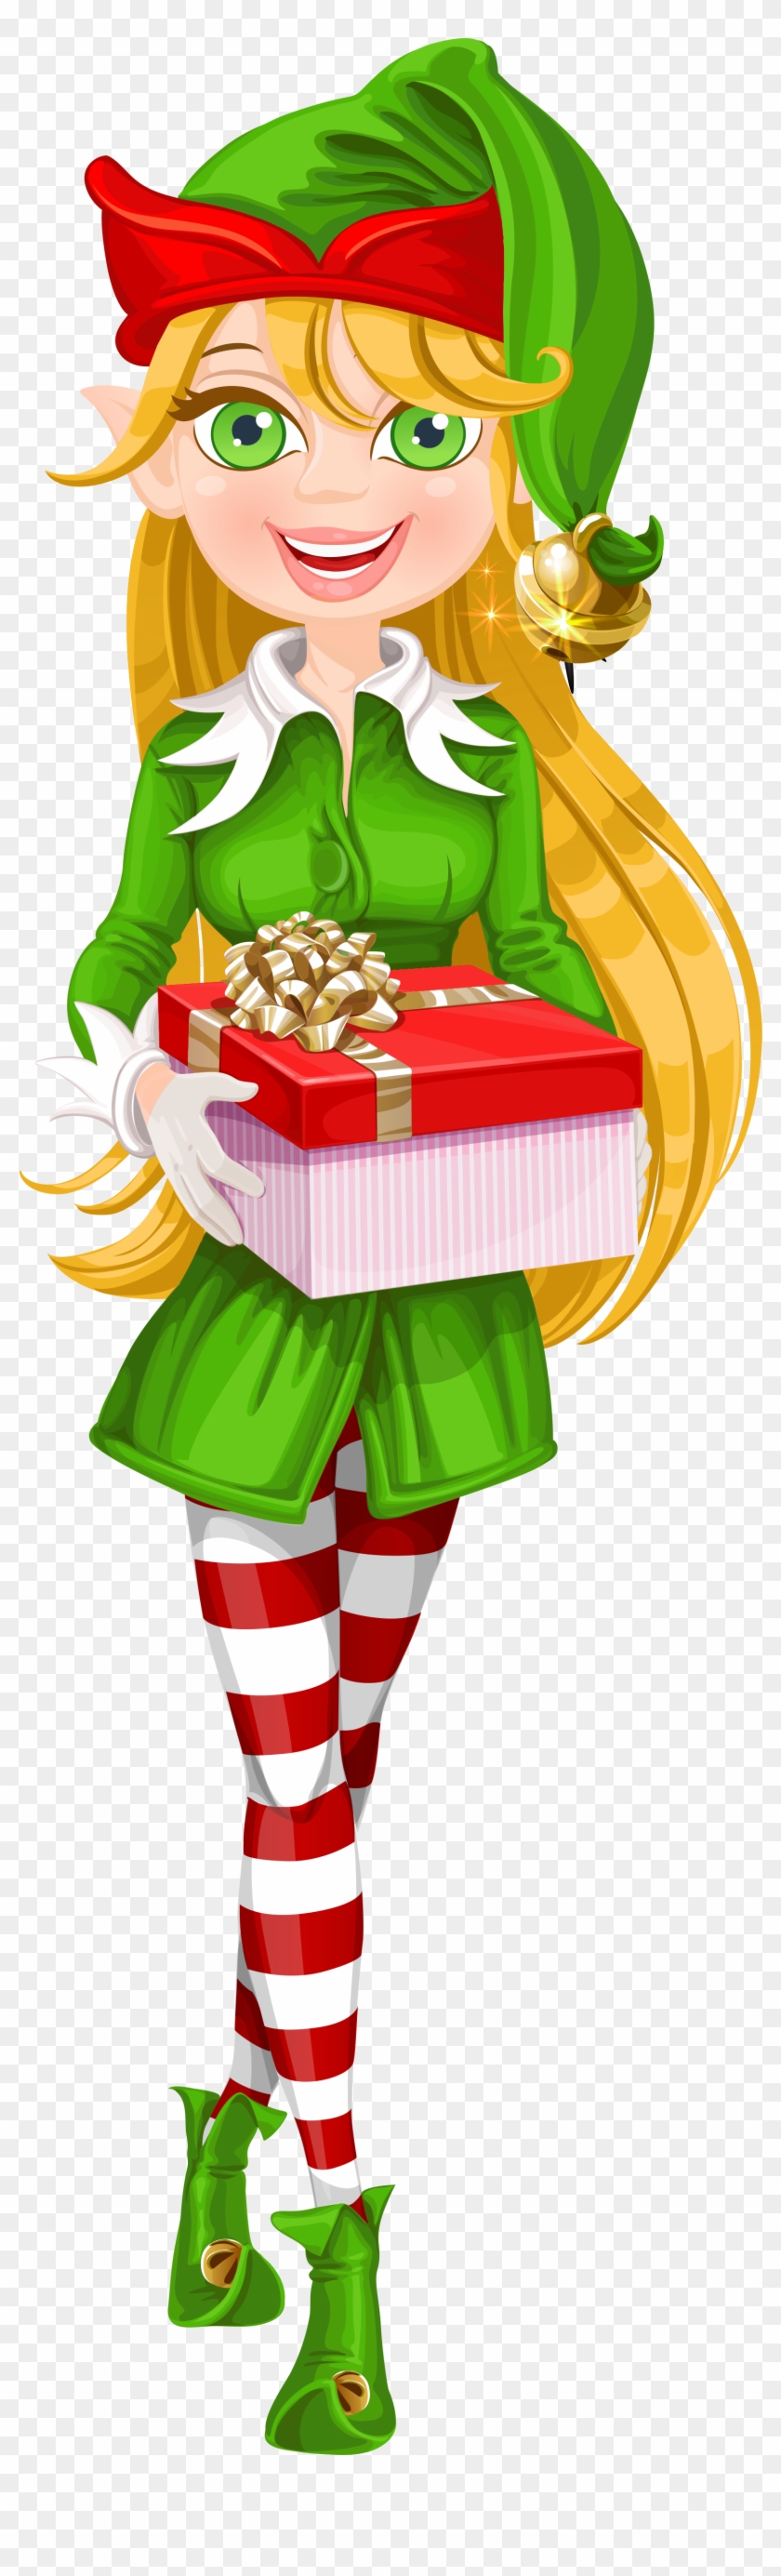 Christmas Elf Png Download Image - Santa Female Cartoon Elf Clipart #367216